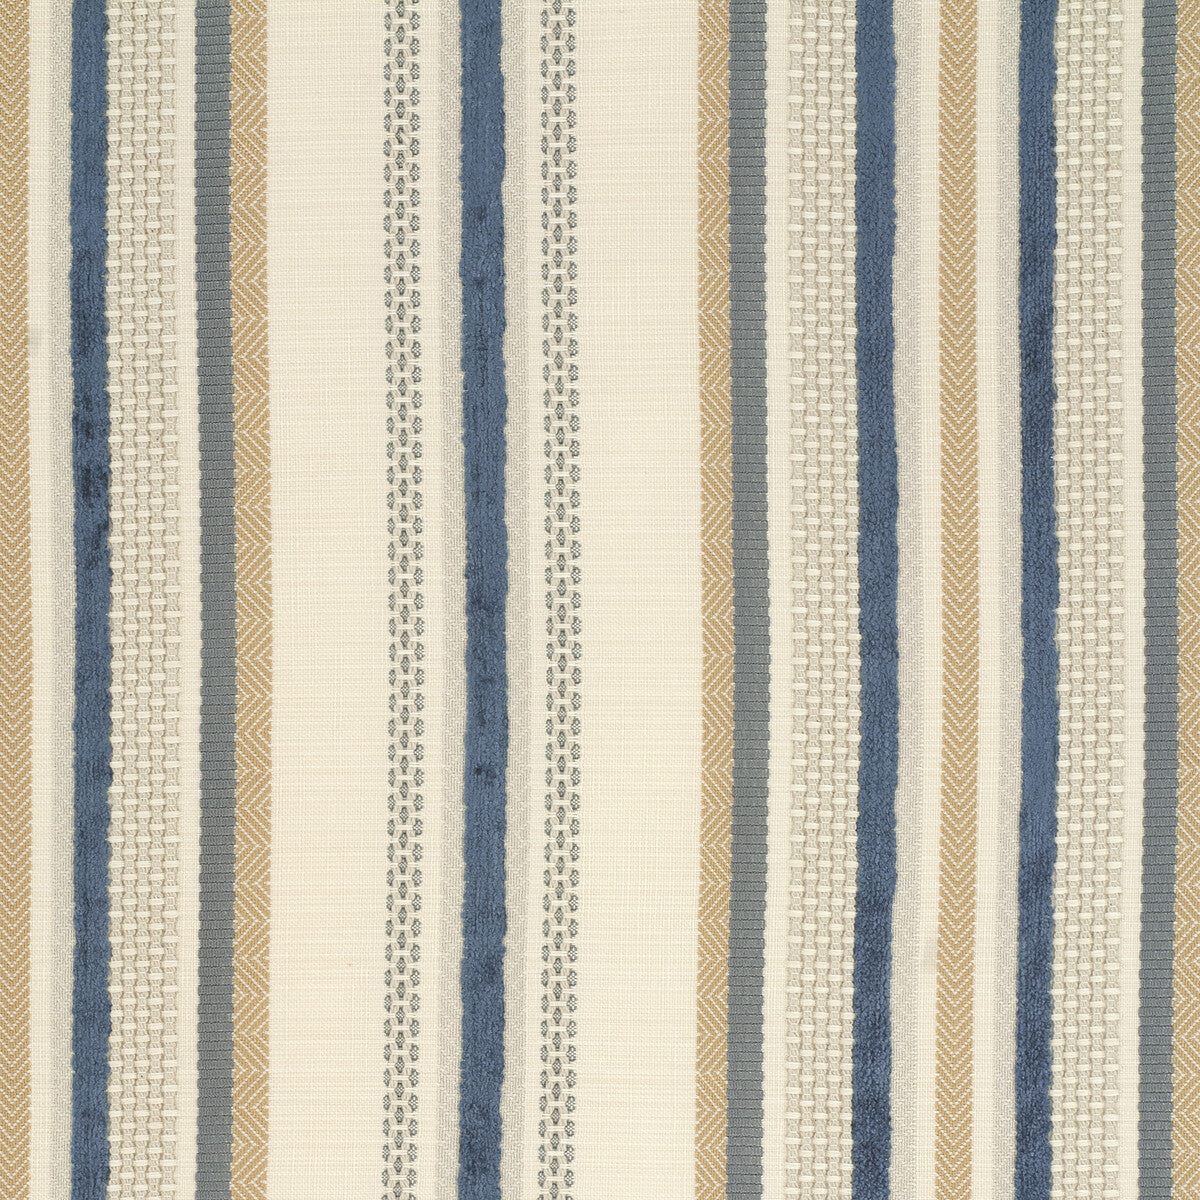 Kravet Design fabric in 34727-516 color - pattern 34727.516.0 - by Kravet Design in the Gis collection